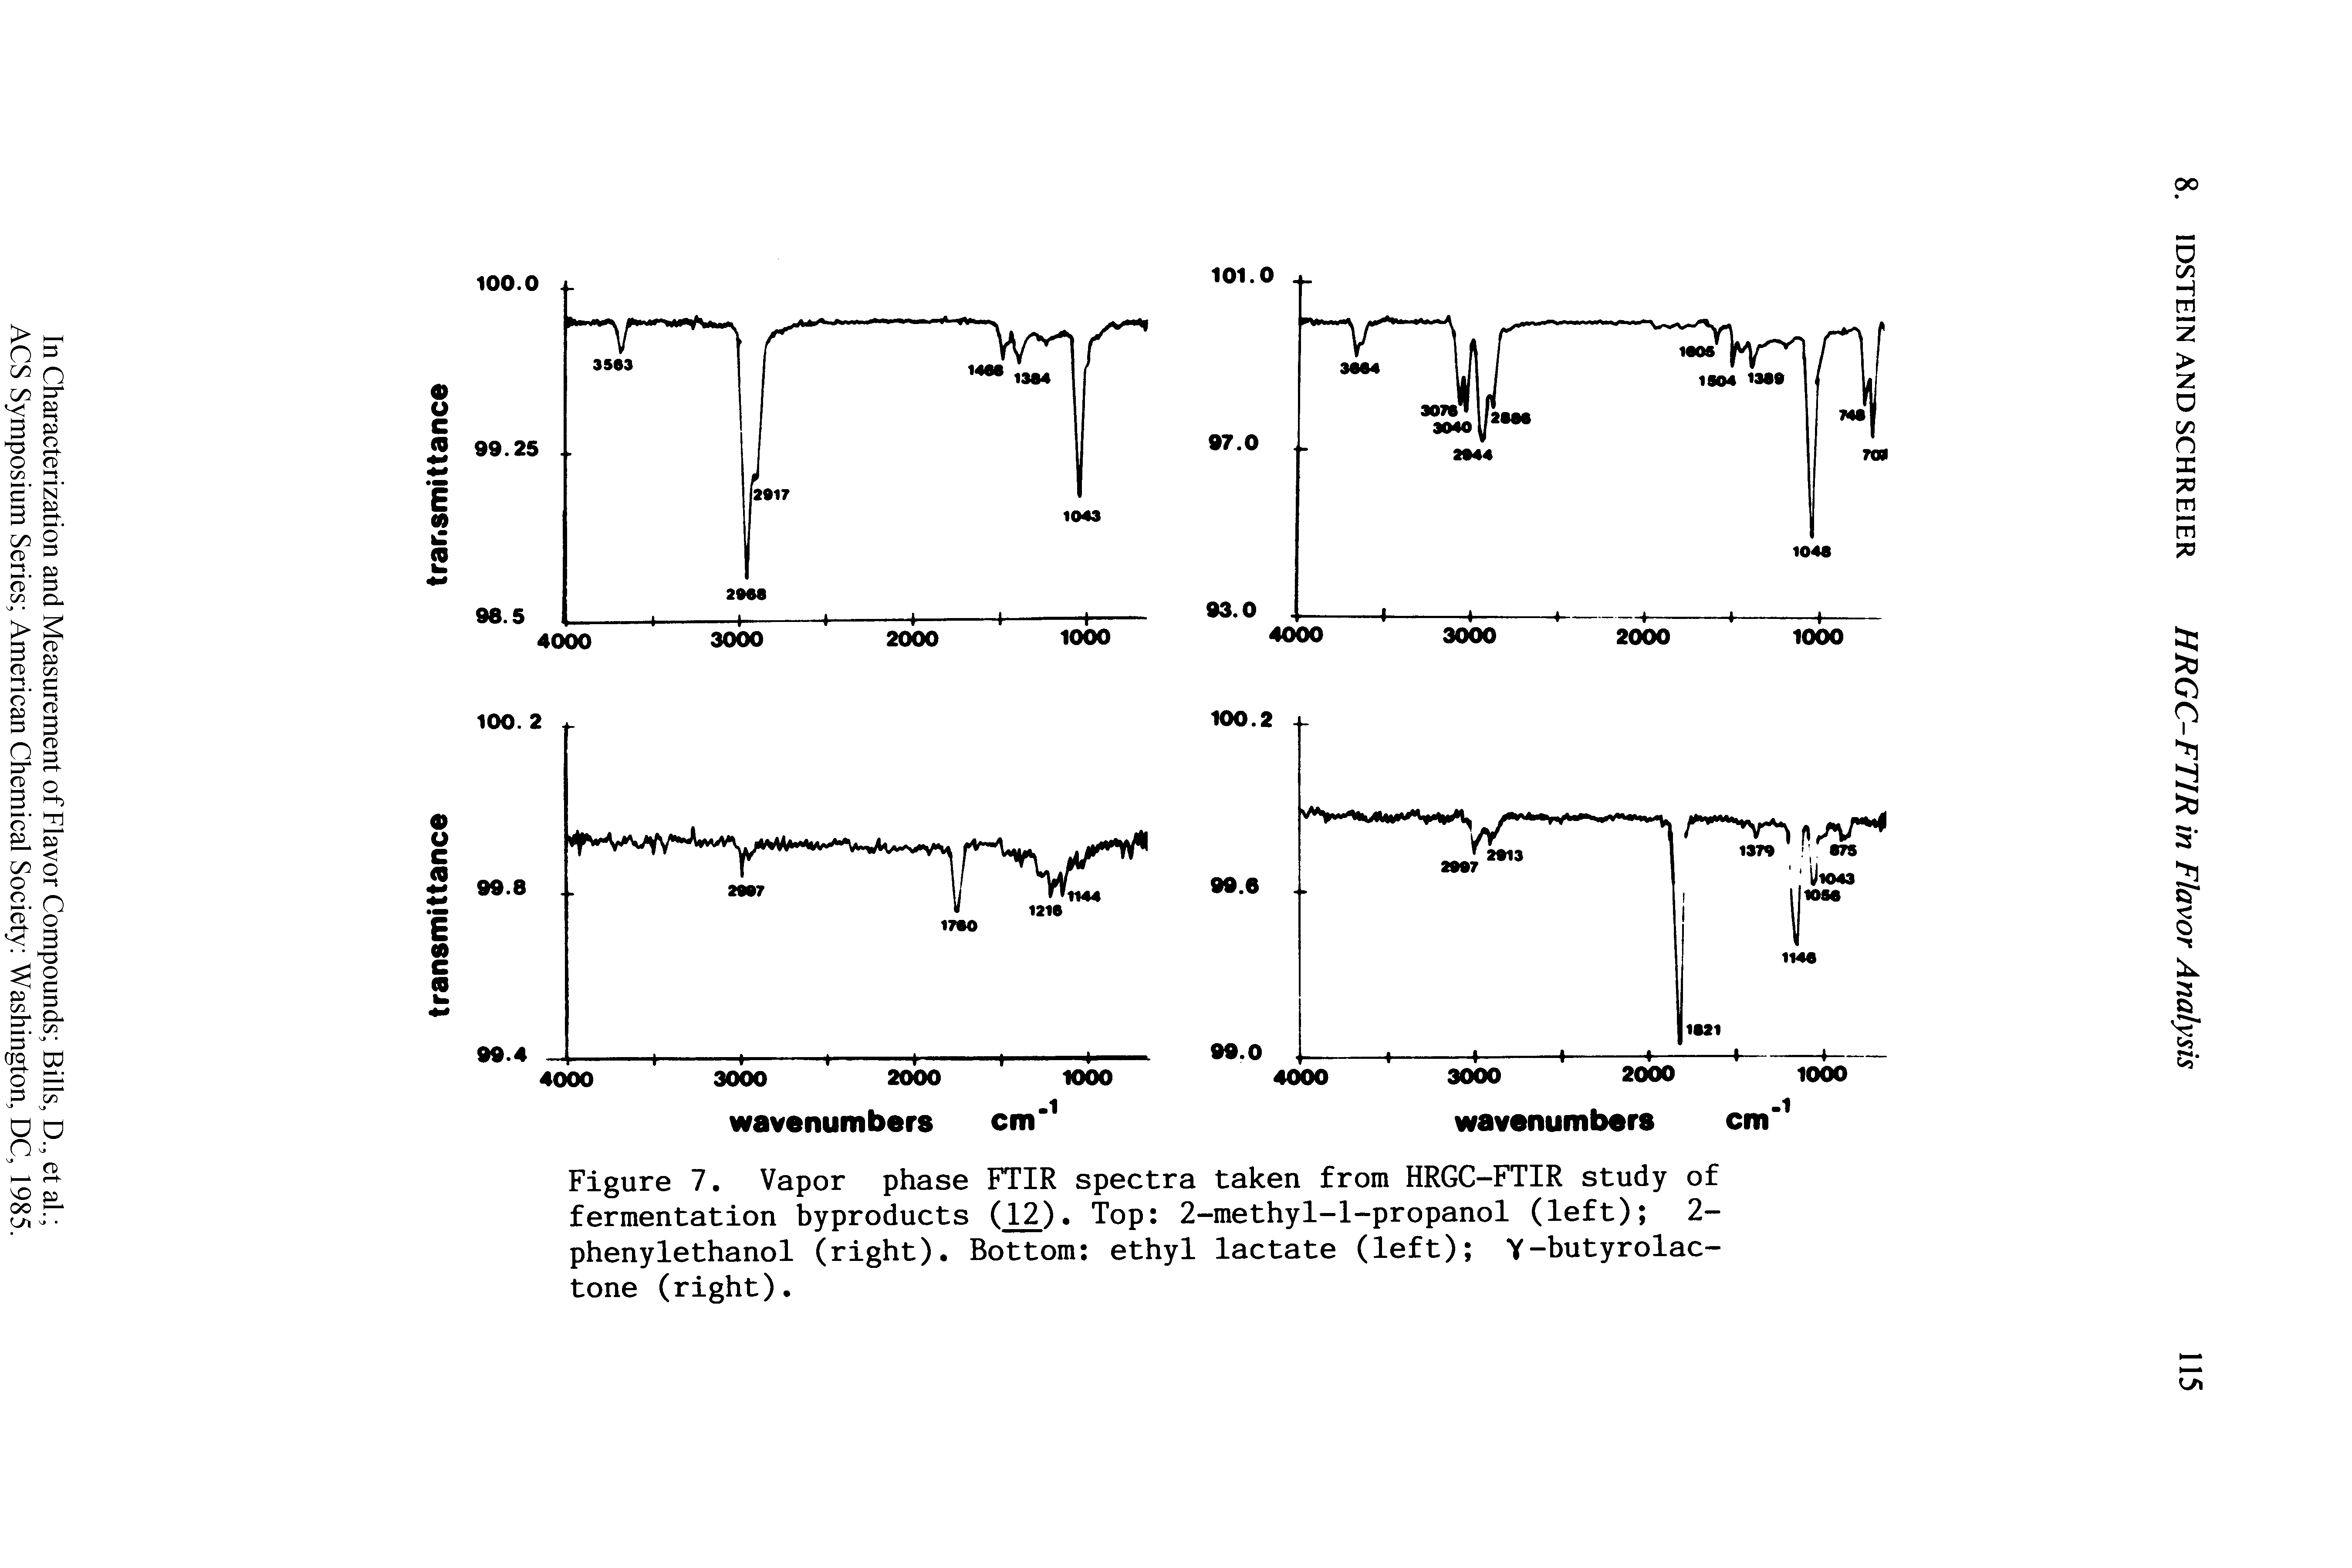 Figure 7. Vapor phase FTIR spectra taken from HRGC-FTIR study of fermentation byproducts (12). Top 2-methyl-l-propanol (left) 2-phenylethanol (right). Bottom ethyl lactate (left) Y-butyrolac-tone (right).